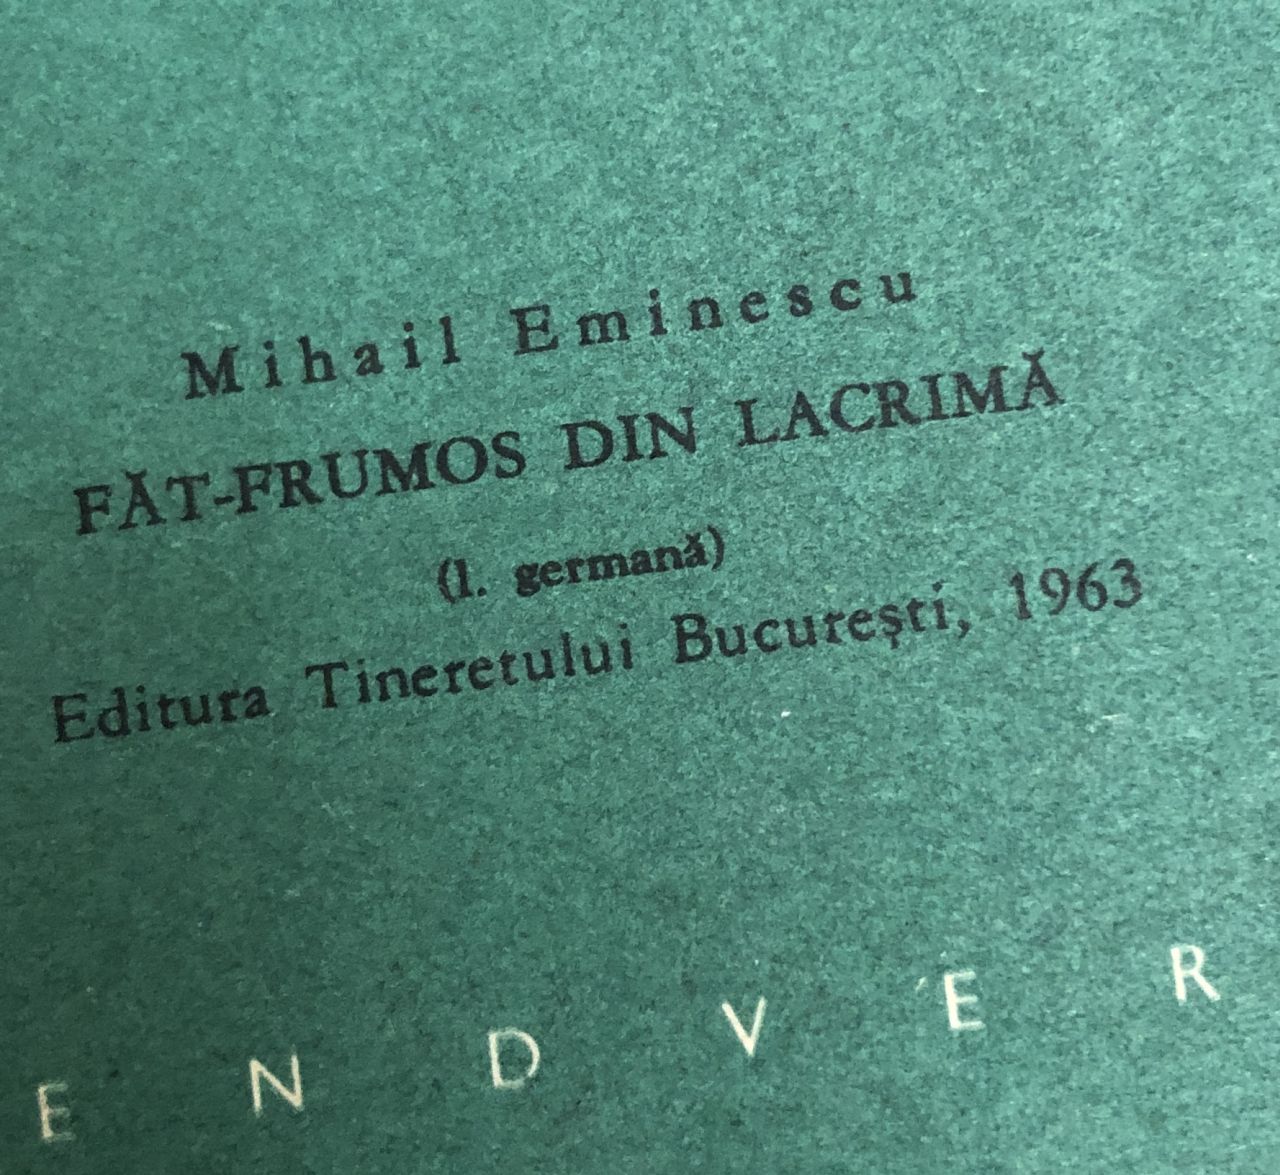 truck Expert complications Fat Frumos din Lacrima, 1963, Mihai Eminescu, carte veche in limba germana,  format A4+, 32 pagini (cc09) – kolectionarul.ro